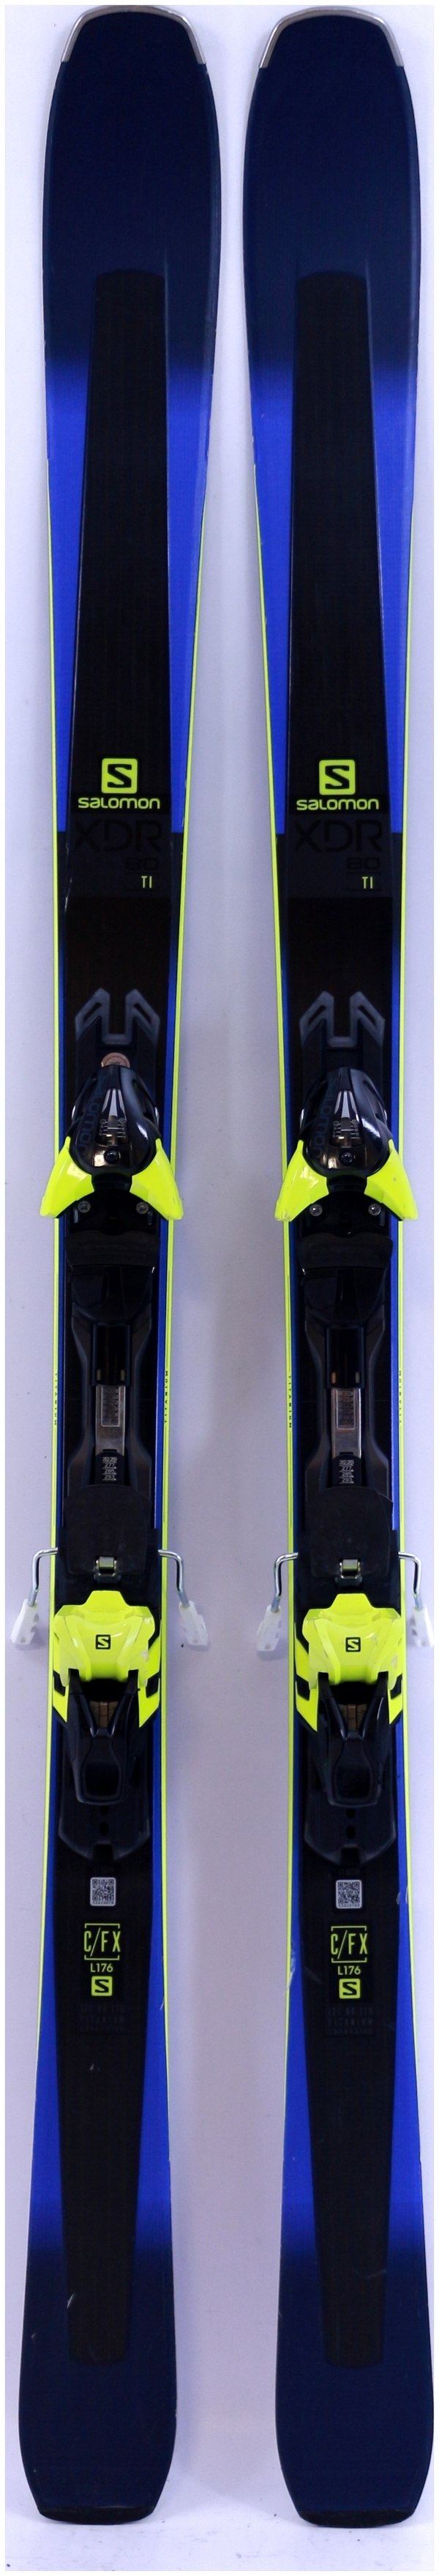 vaak Verwaand vereist 2018 Salomon XDR 80 Ti 176cm Used Demo Skis on Sale - Powder7